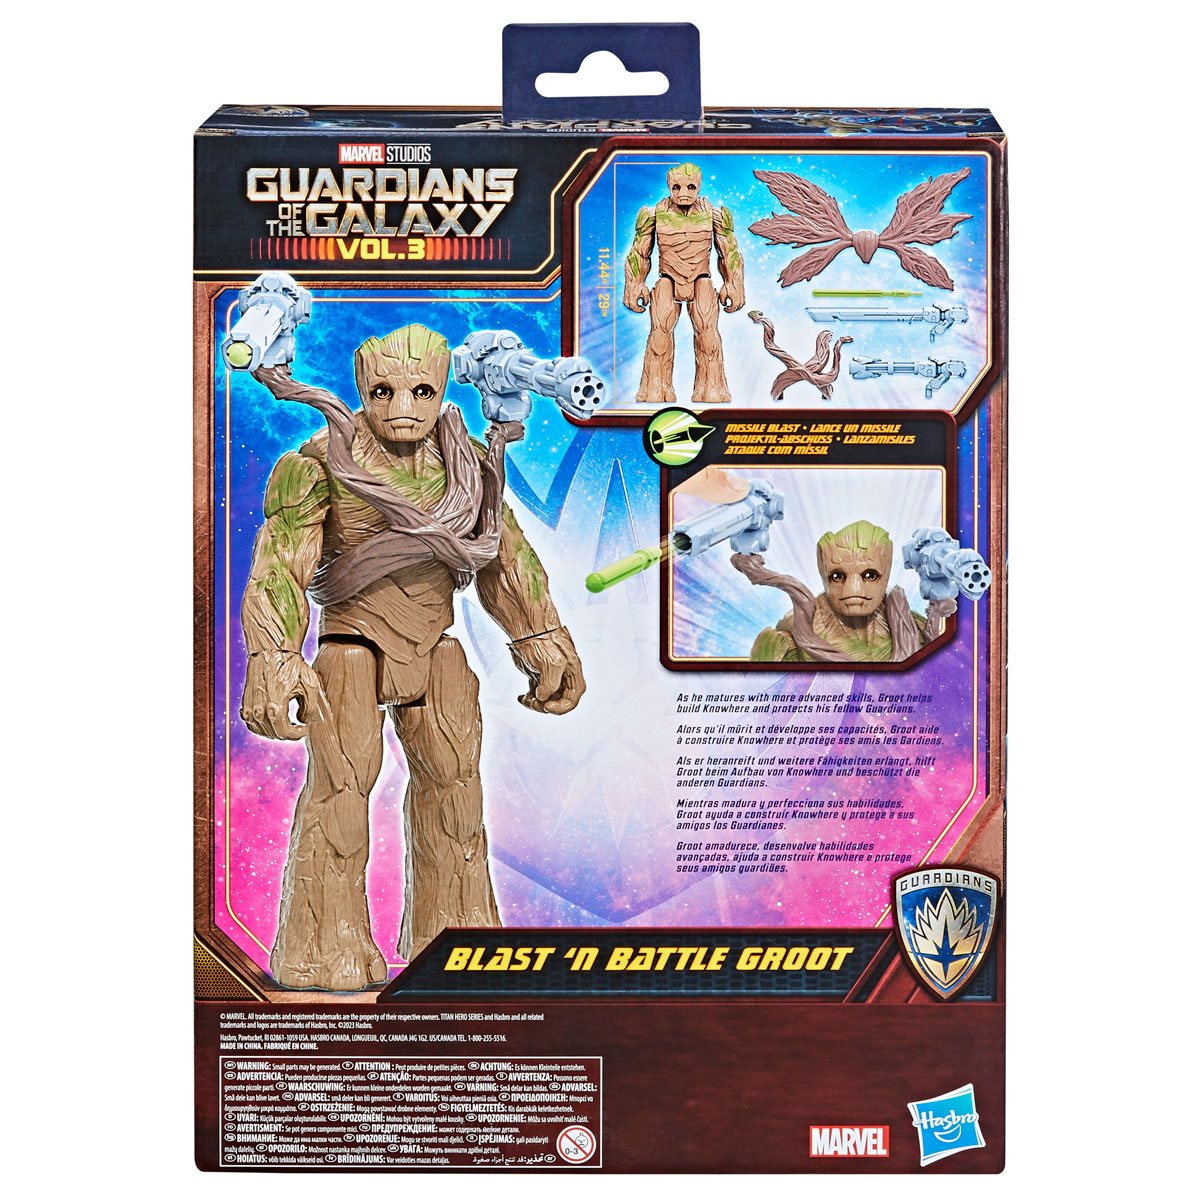 Figurine Groot - Titan hero series AVENGERS